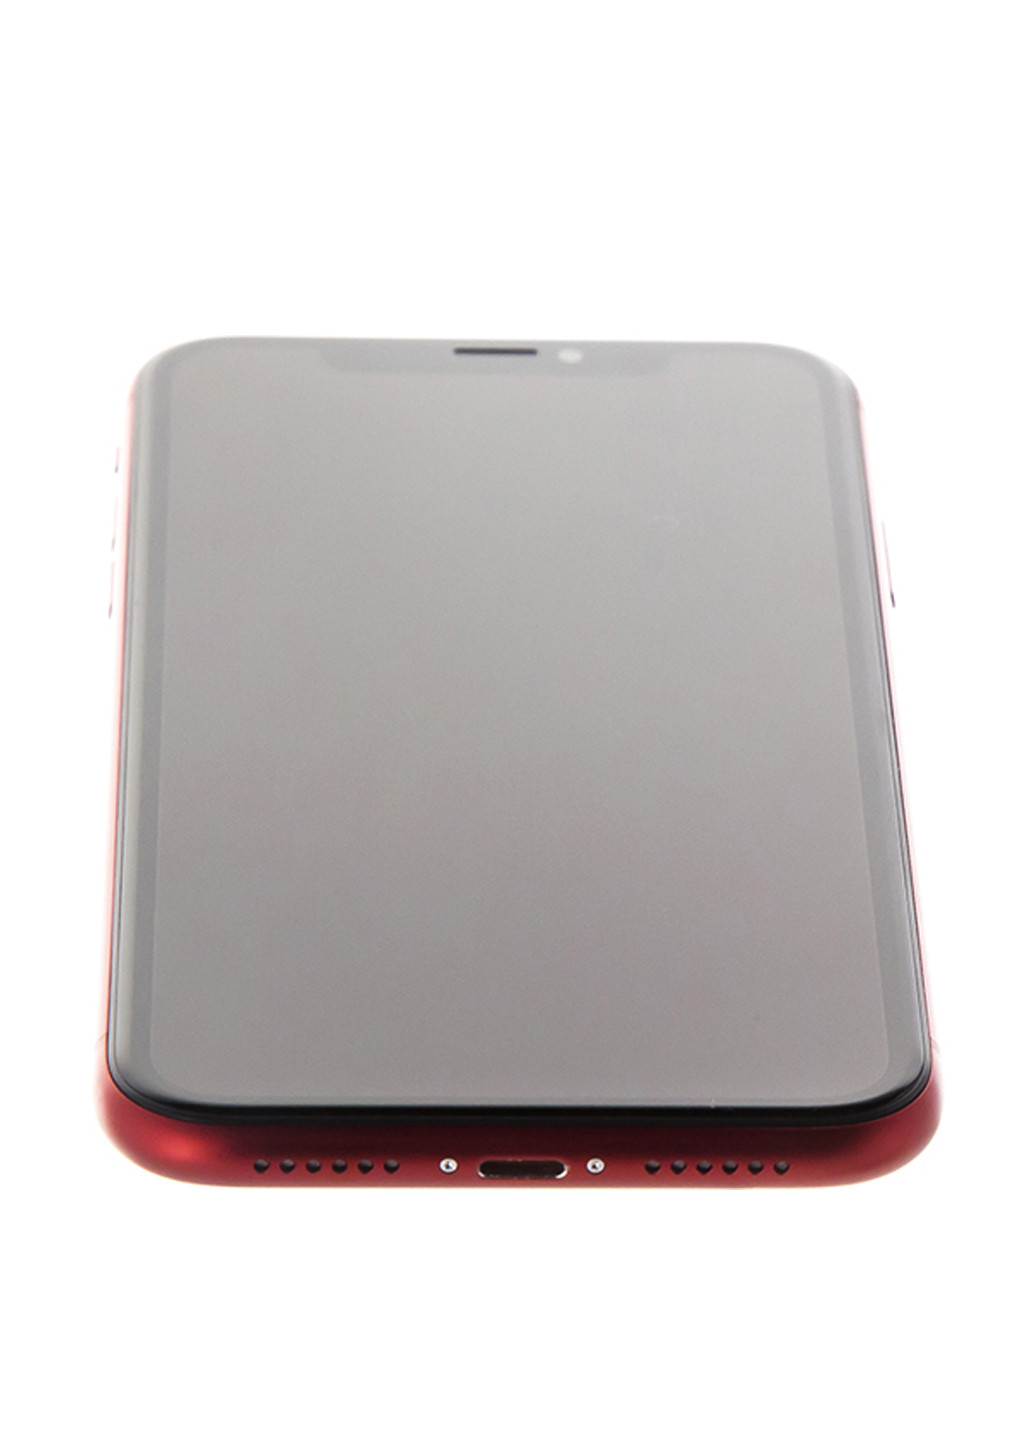 Смартфон iPhone XR 64GB (PRODUCT) RED (MRY62) Apple iphone xr 64gb (product)red (mry62) (130358600)